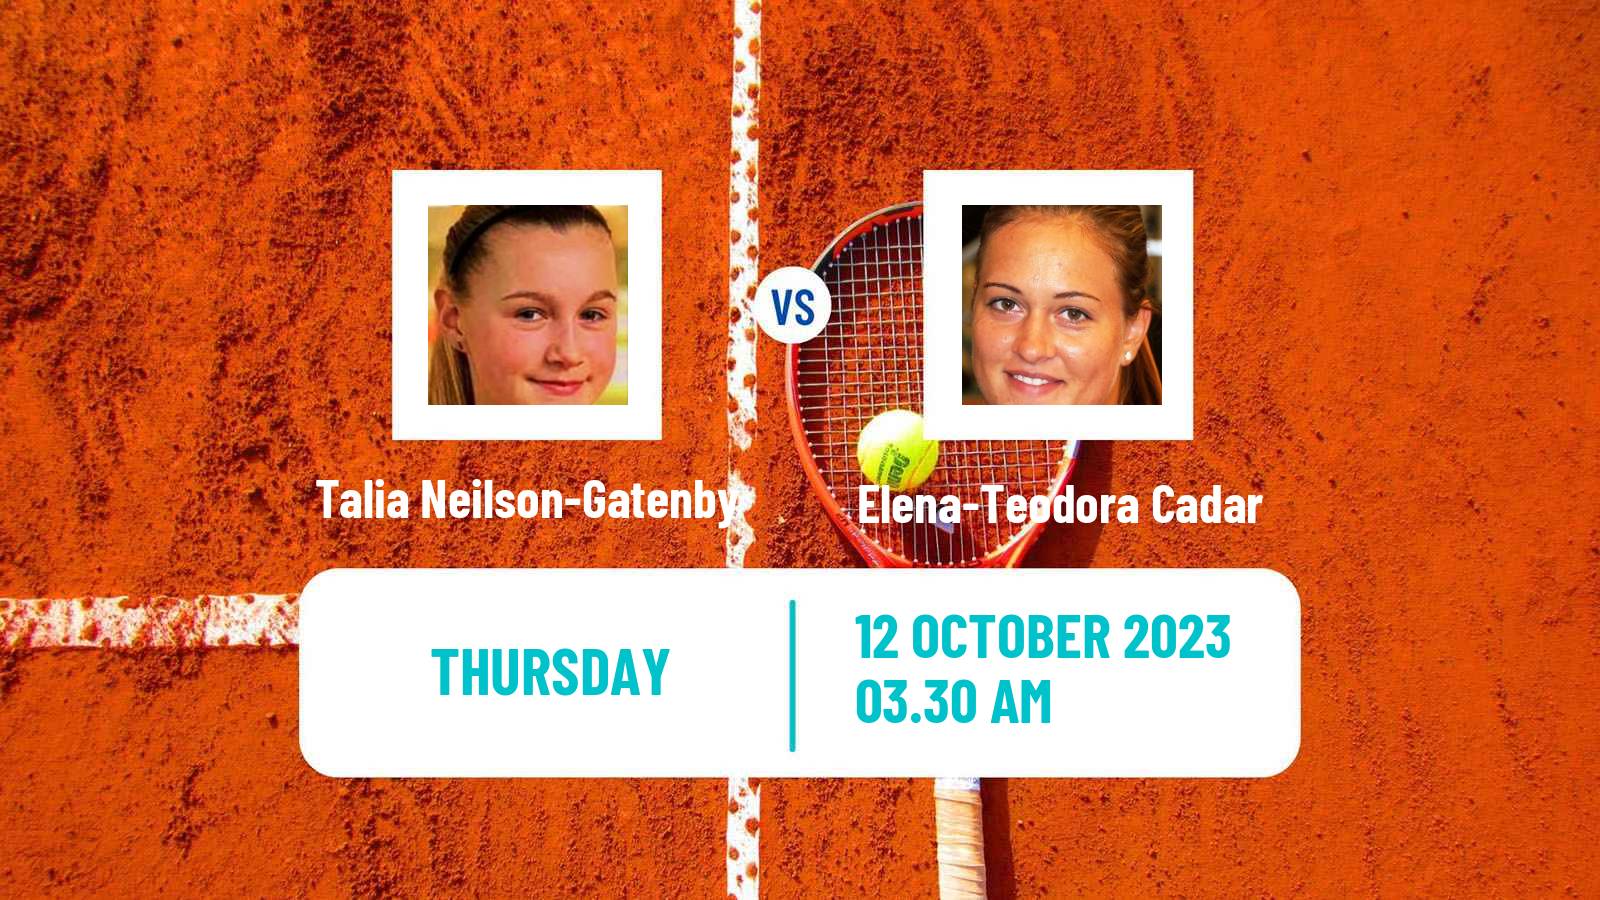 Tennis ITF W15 Sharm Elsheikh 14 Women Talia Neilson-Gatenby - Elena-Teodora Cadar